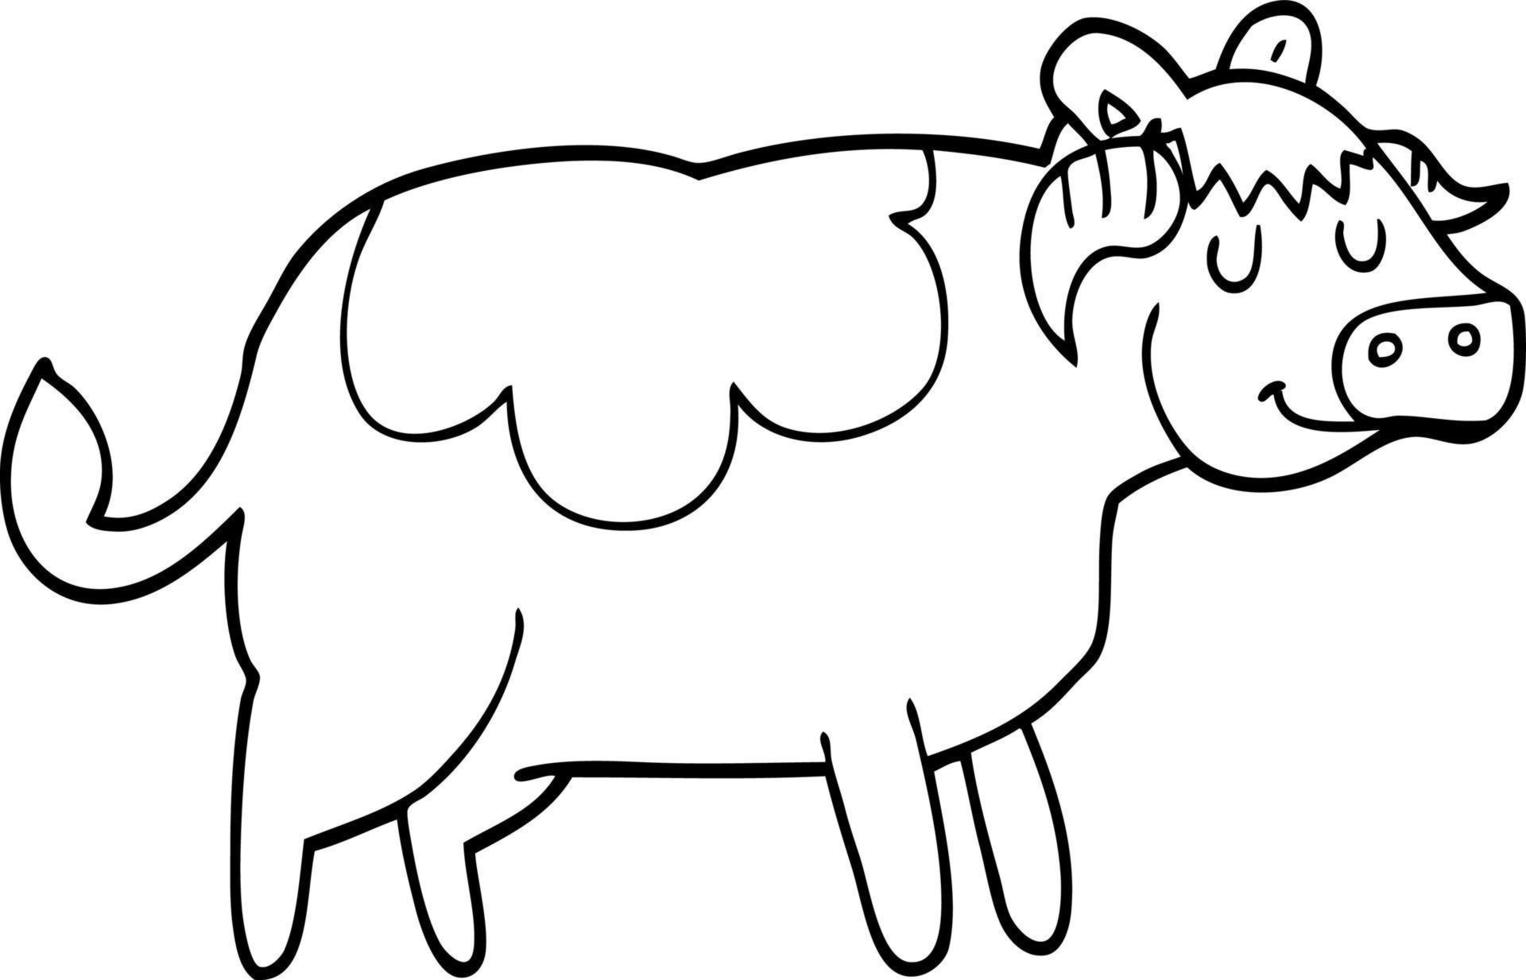 line drawing cartoon cow vector